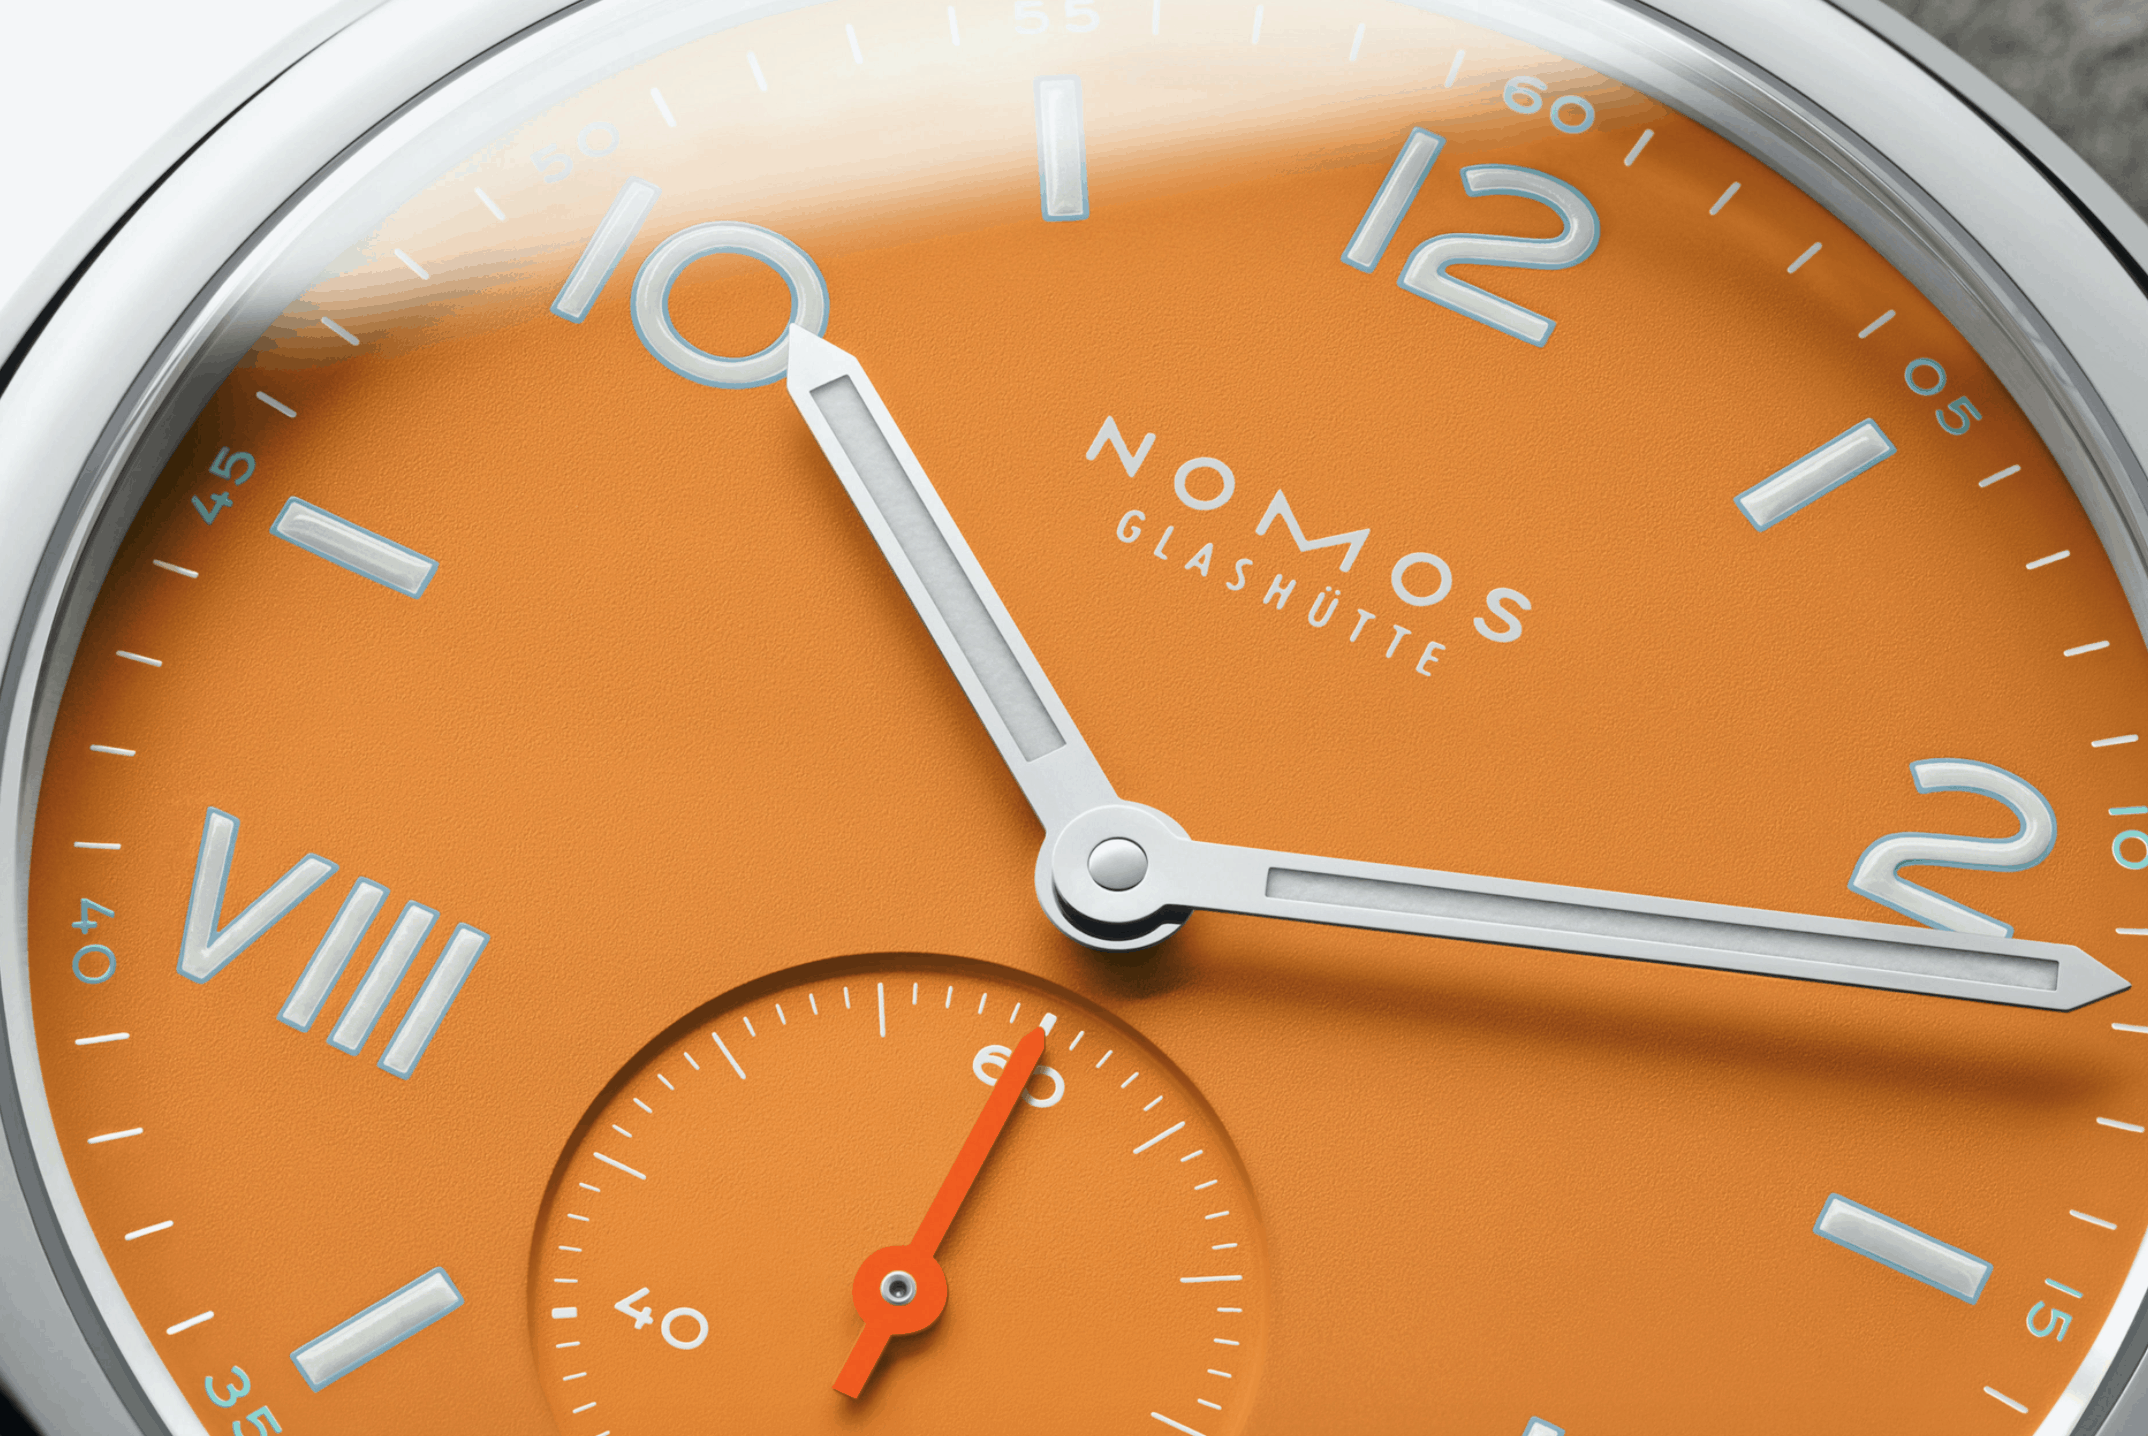 Introducing The Nomos Club Campus In Absolute Gray & Future Orange